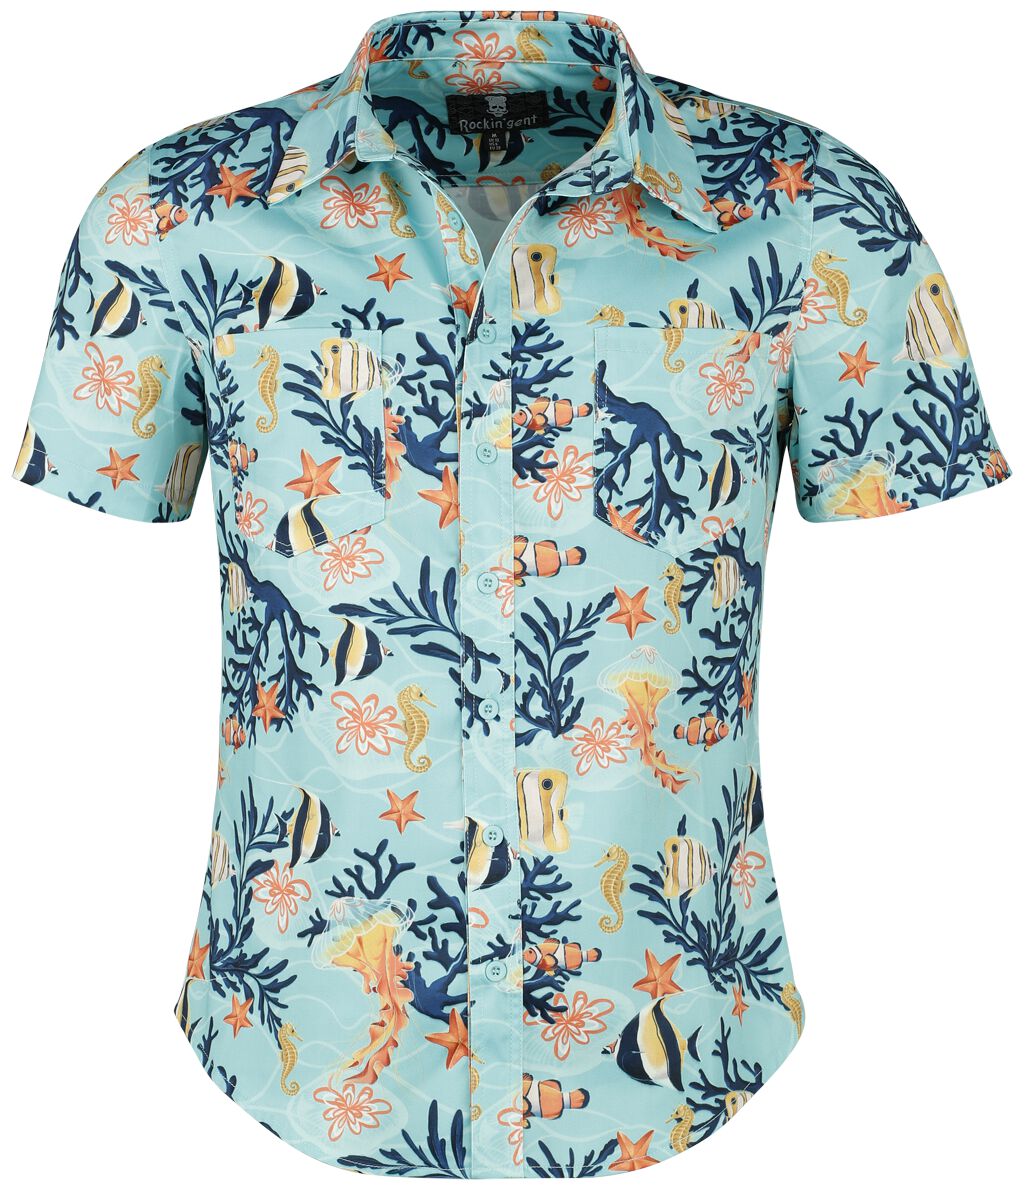 Image of Camicia Maniche Corte di Rockin' Gent shirt - Coral Reef - S a XXL - Uomo - turchese